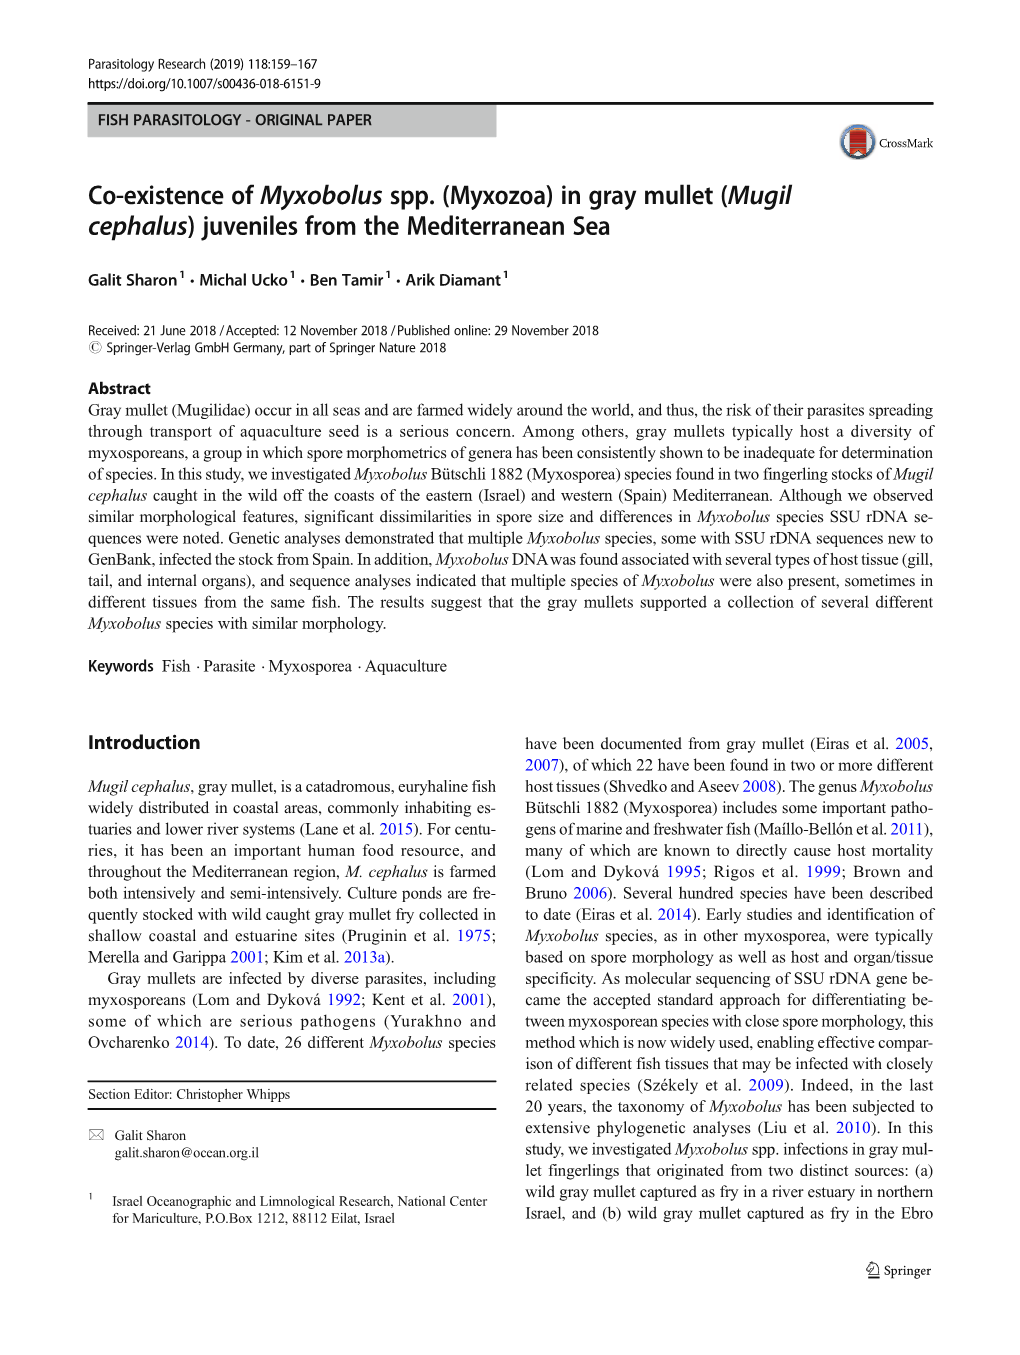 Co-Existence of Myxobolus Spp. (Myxozoa) in Gray Mullet (Mugil Cephalus) Juveniles from the Mediterranean Sea